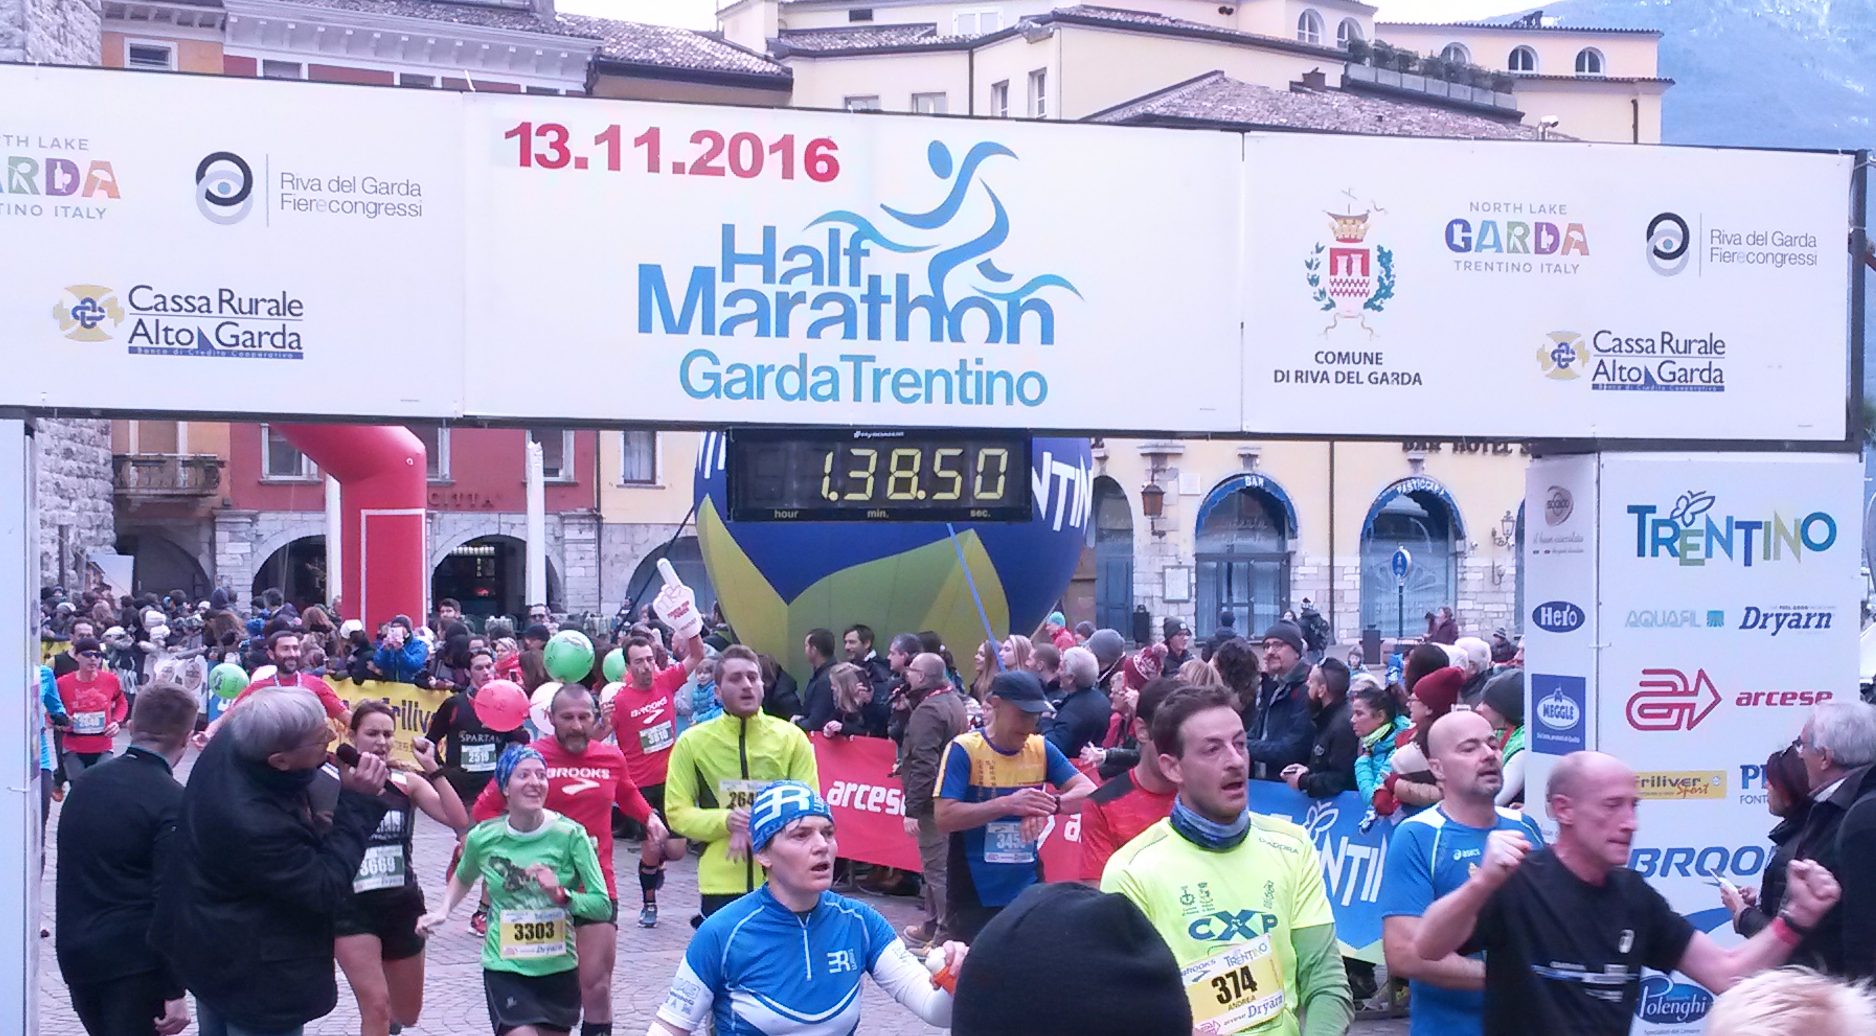 Arrivo Garda Trentino Half Marathon 2016